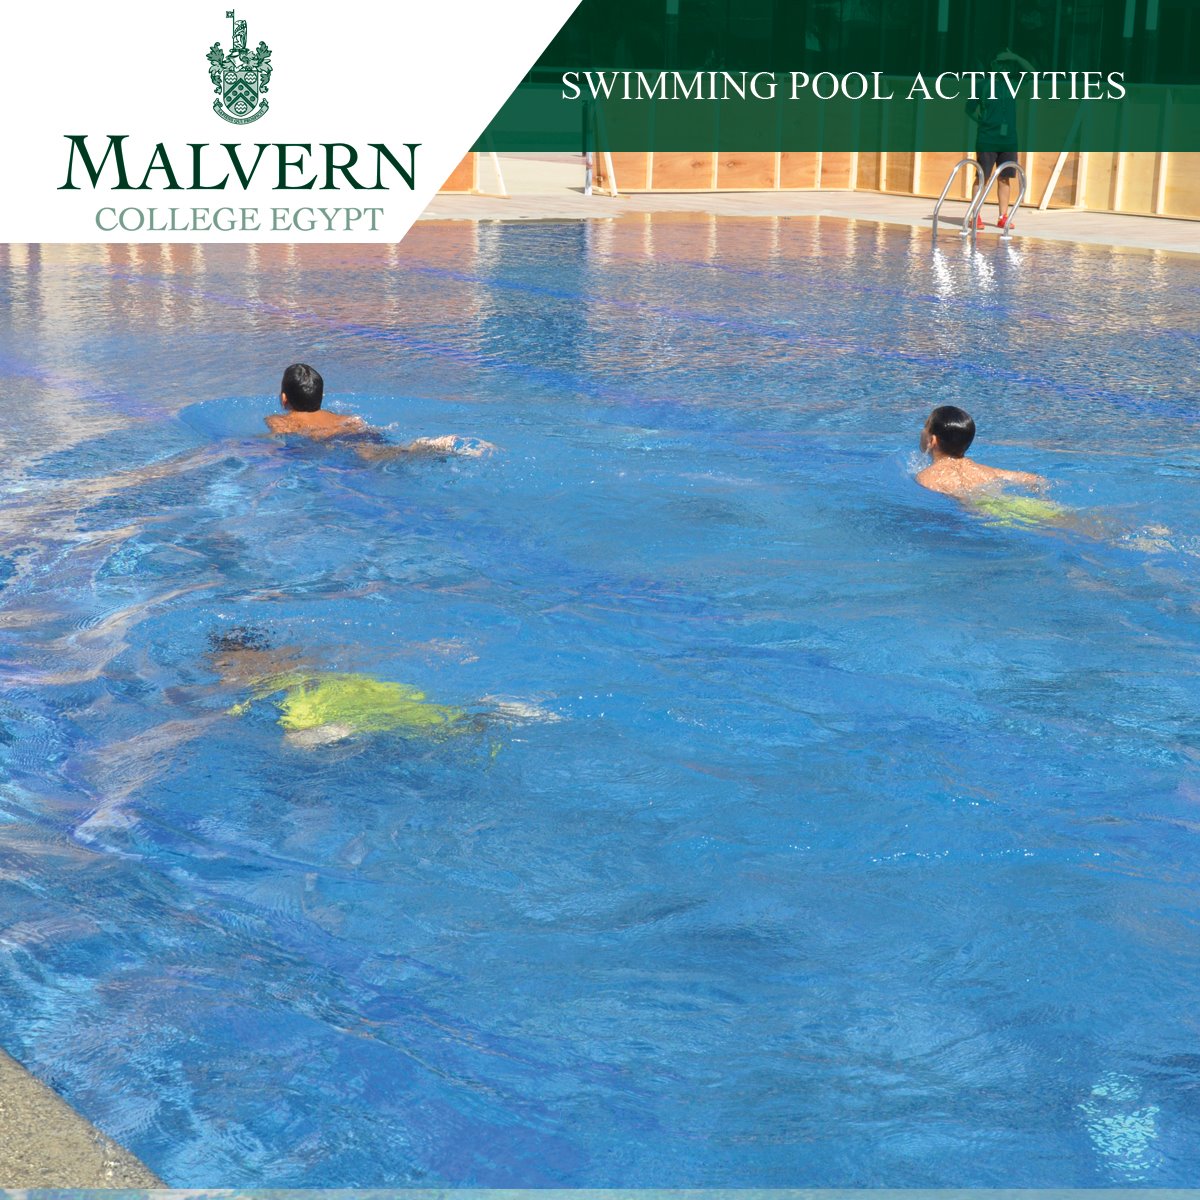 Swimming Pool Activities 2016/17